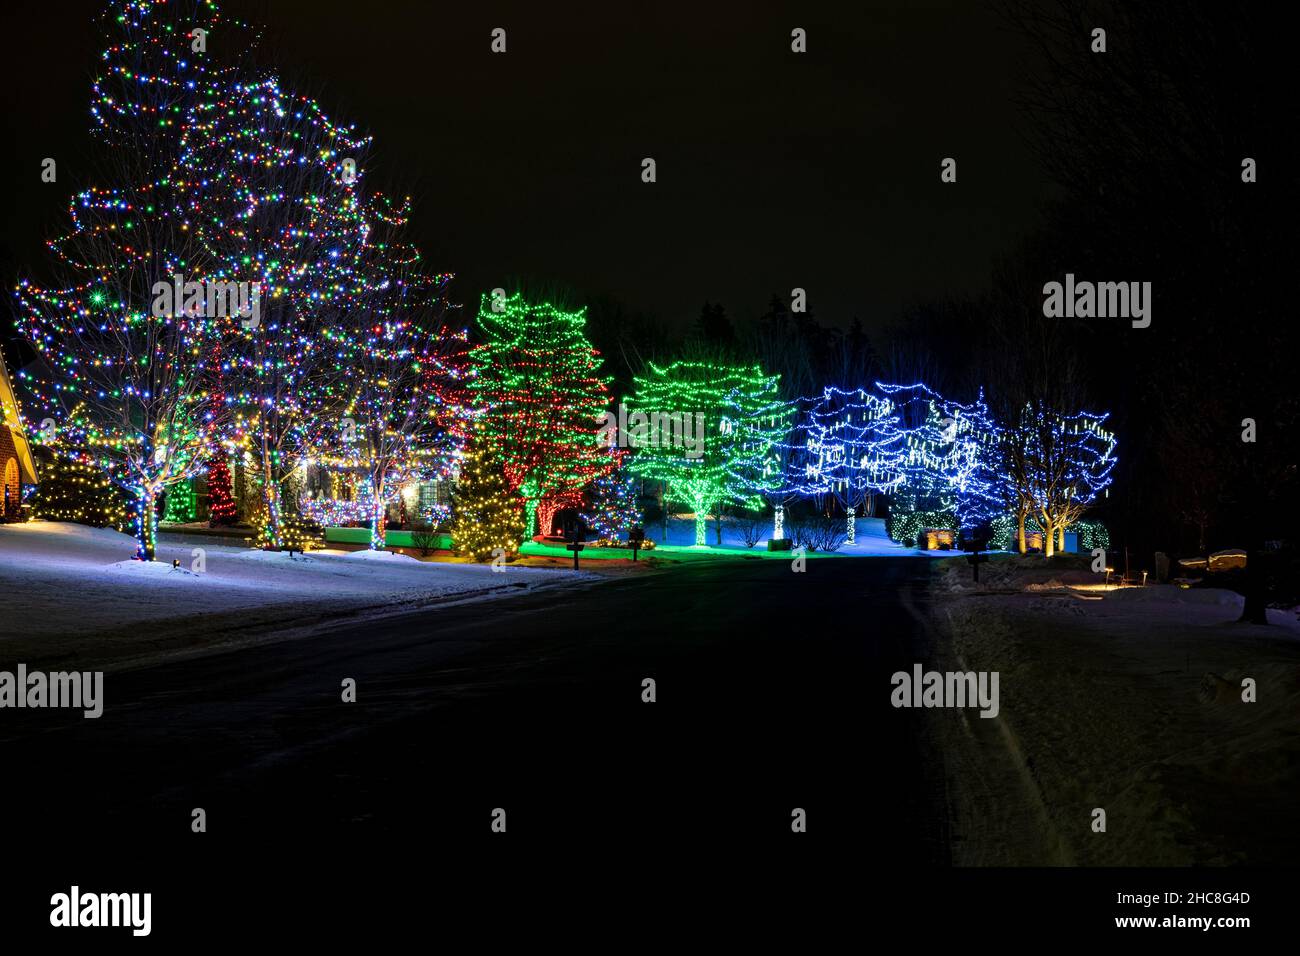 colorful holiday lights display in suburban neighborhood Stock Photo